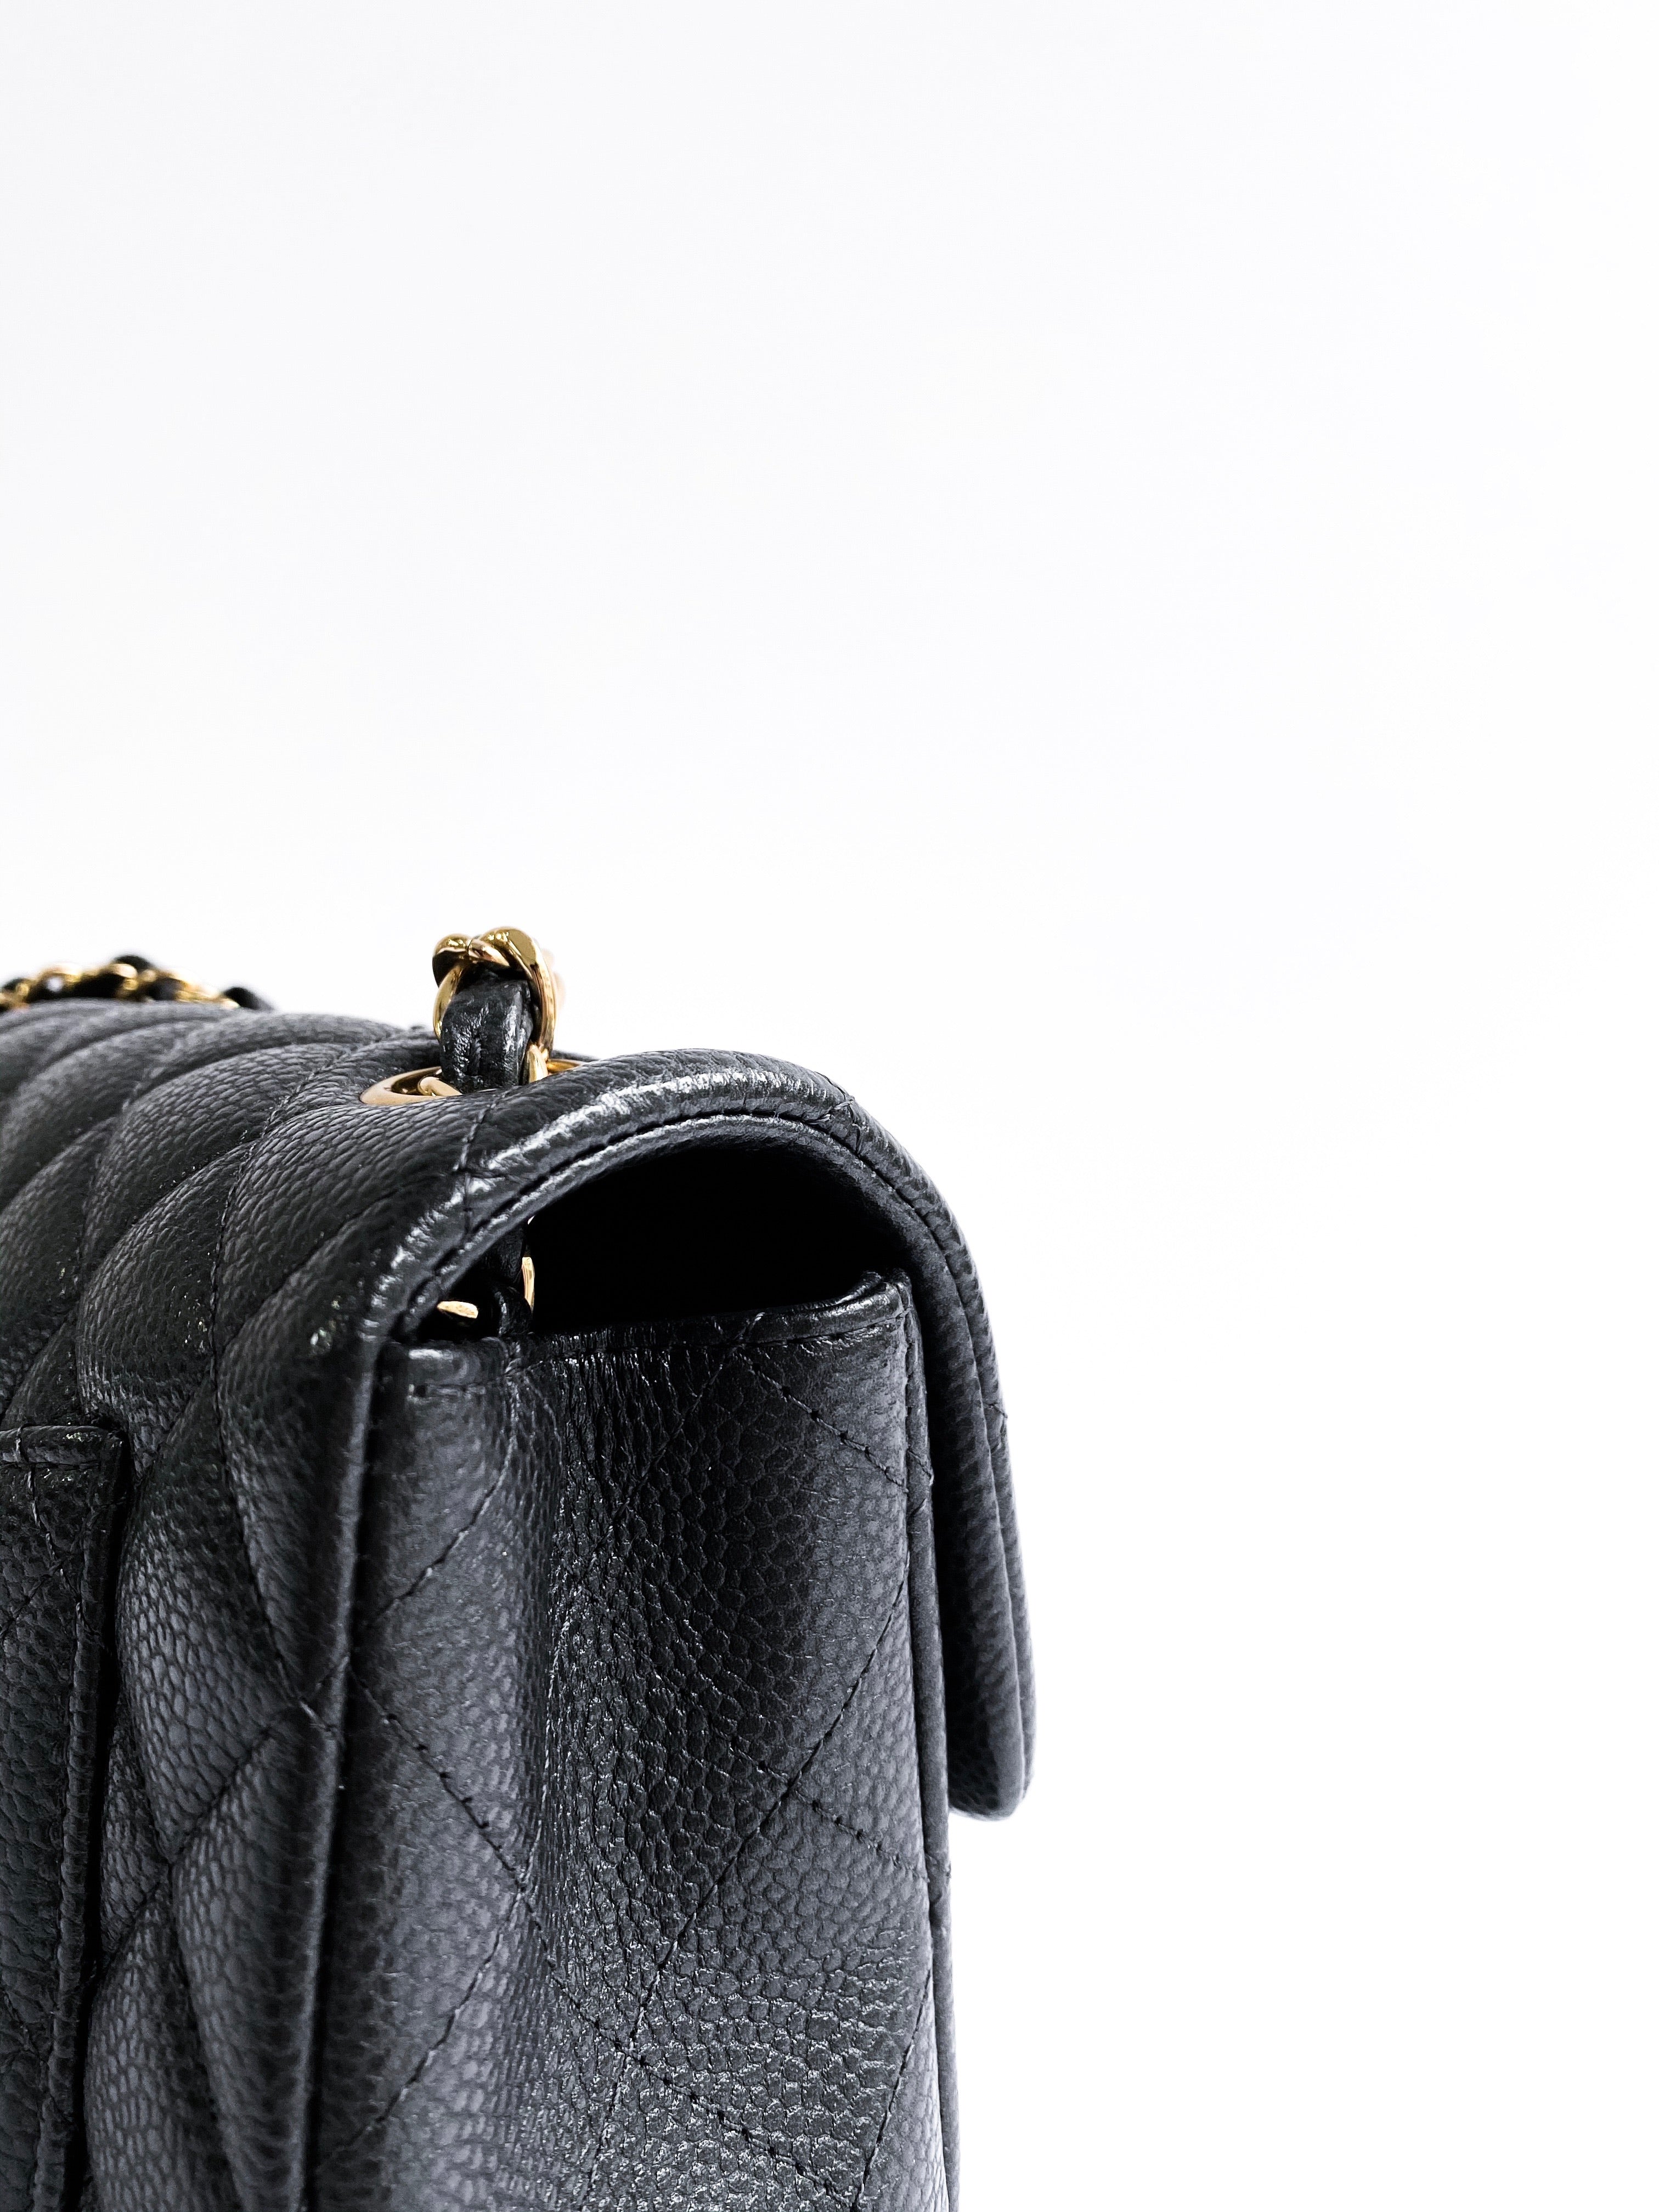 NWT 18S Chanel Black Caviar Classic Rectangular Mini Flap Bag GHW